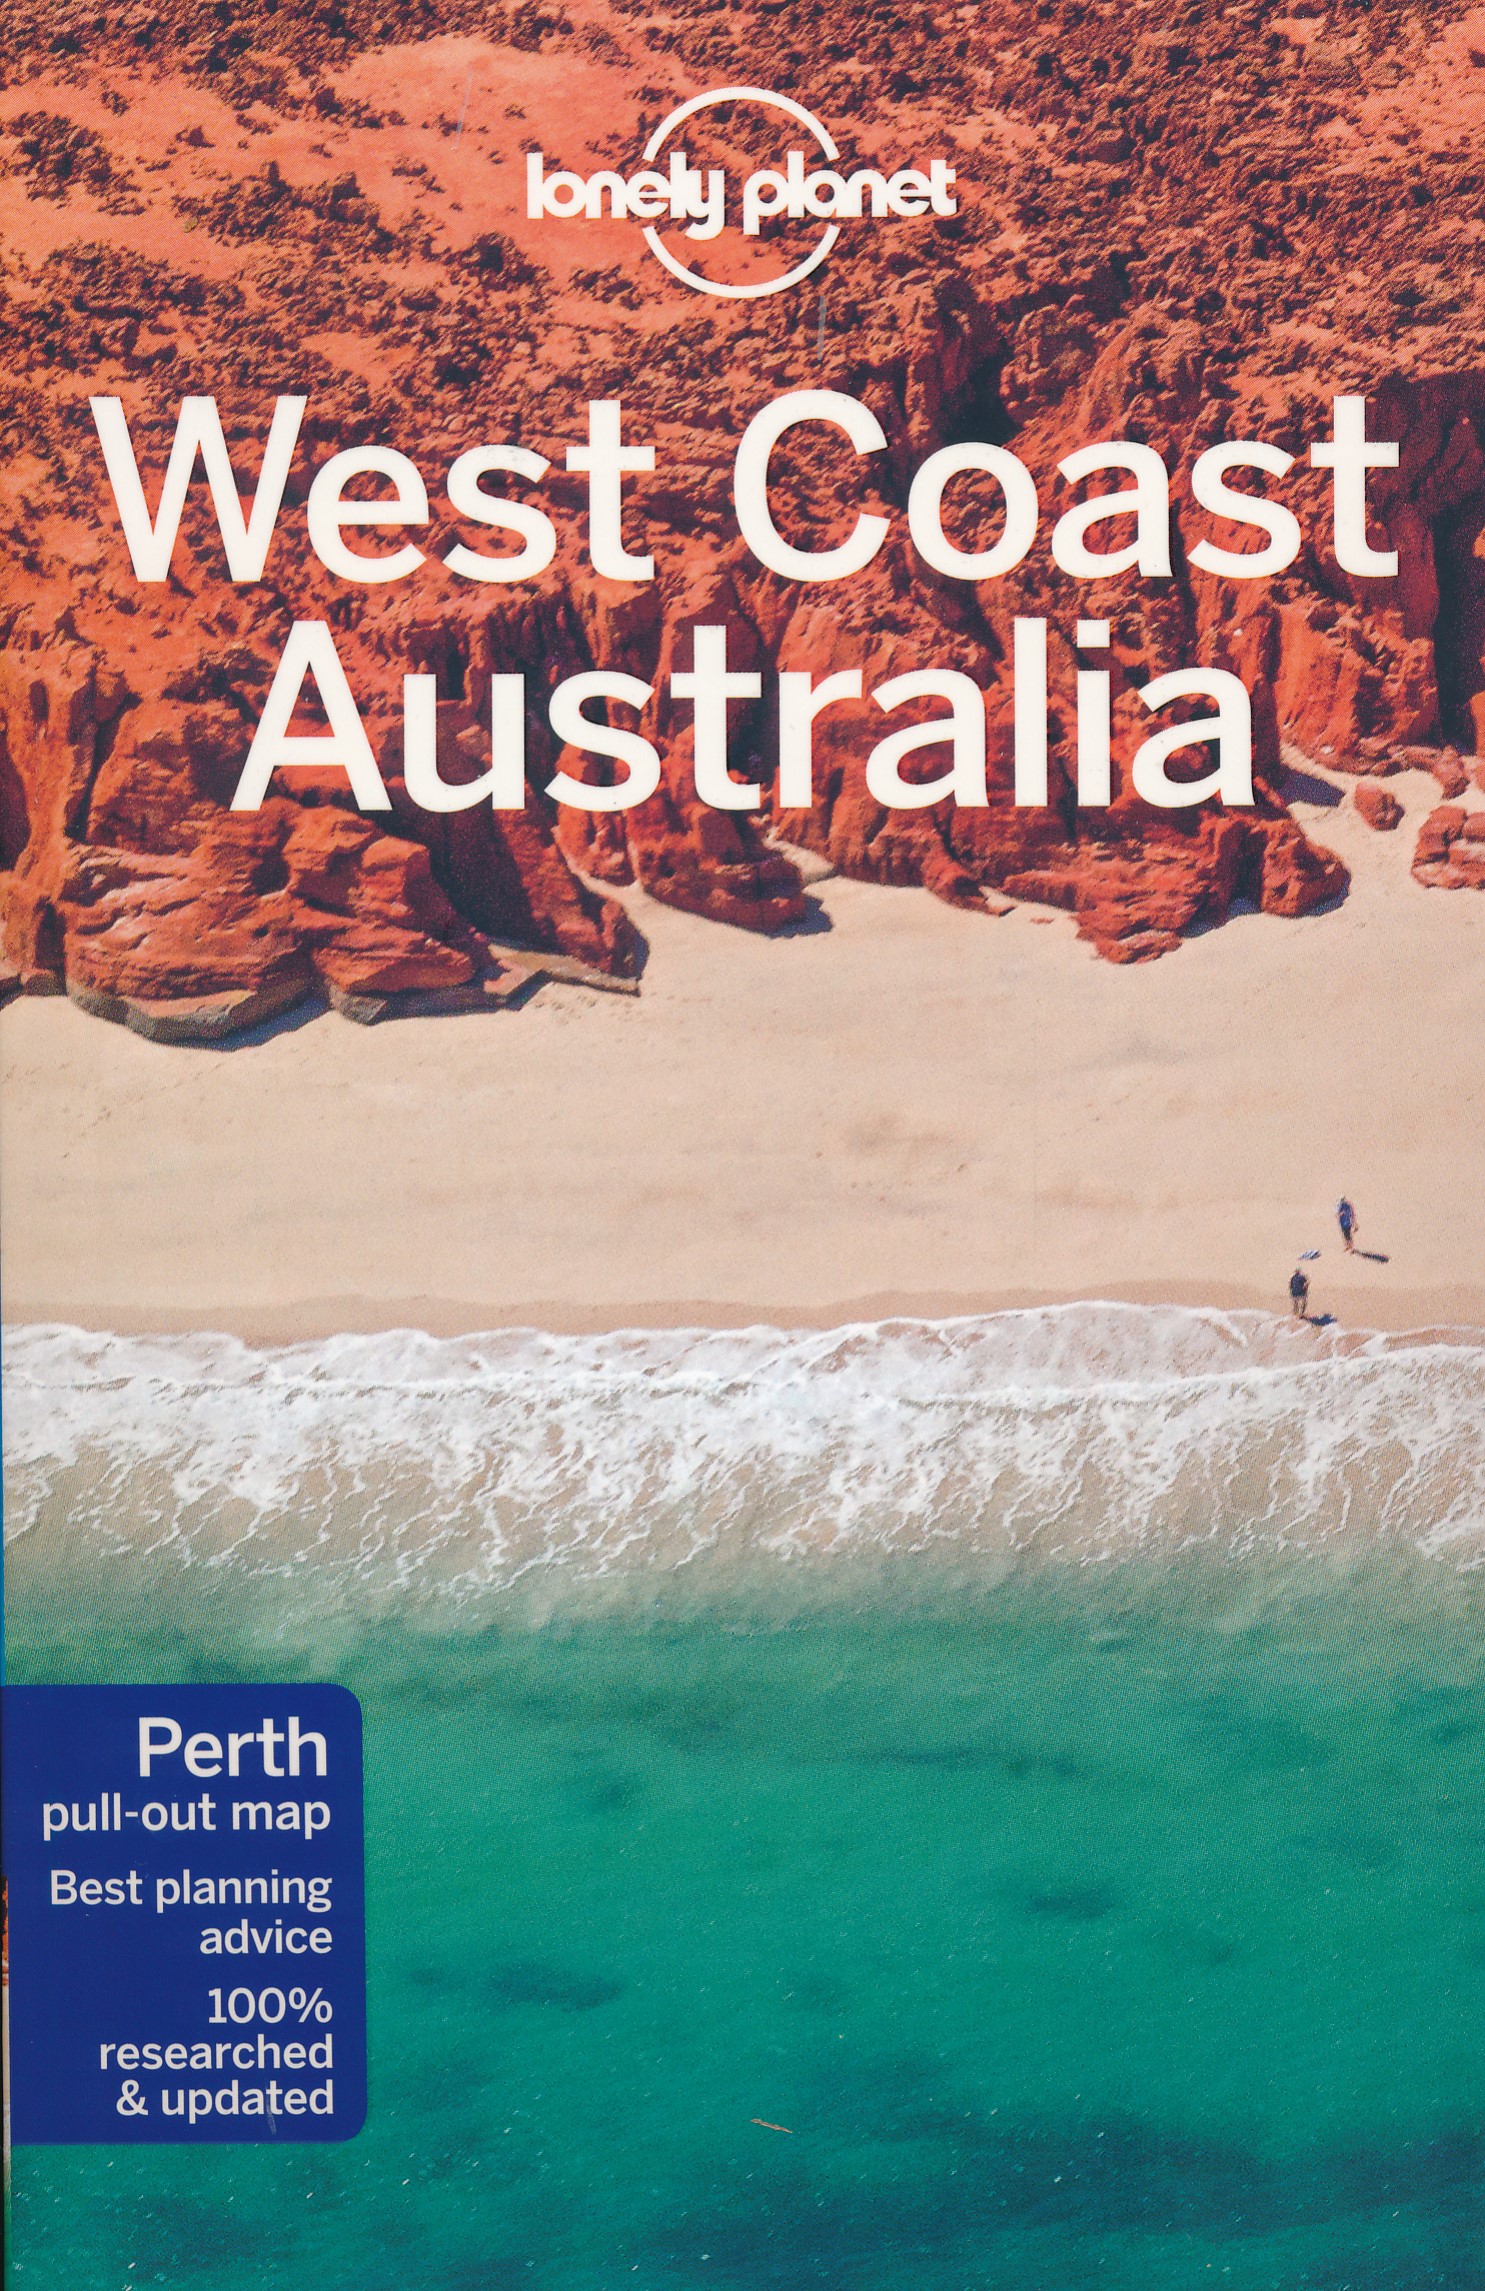 Online bestellen: Reisgids West coast Australia | Lonely Planet